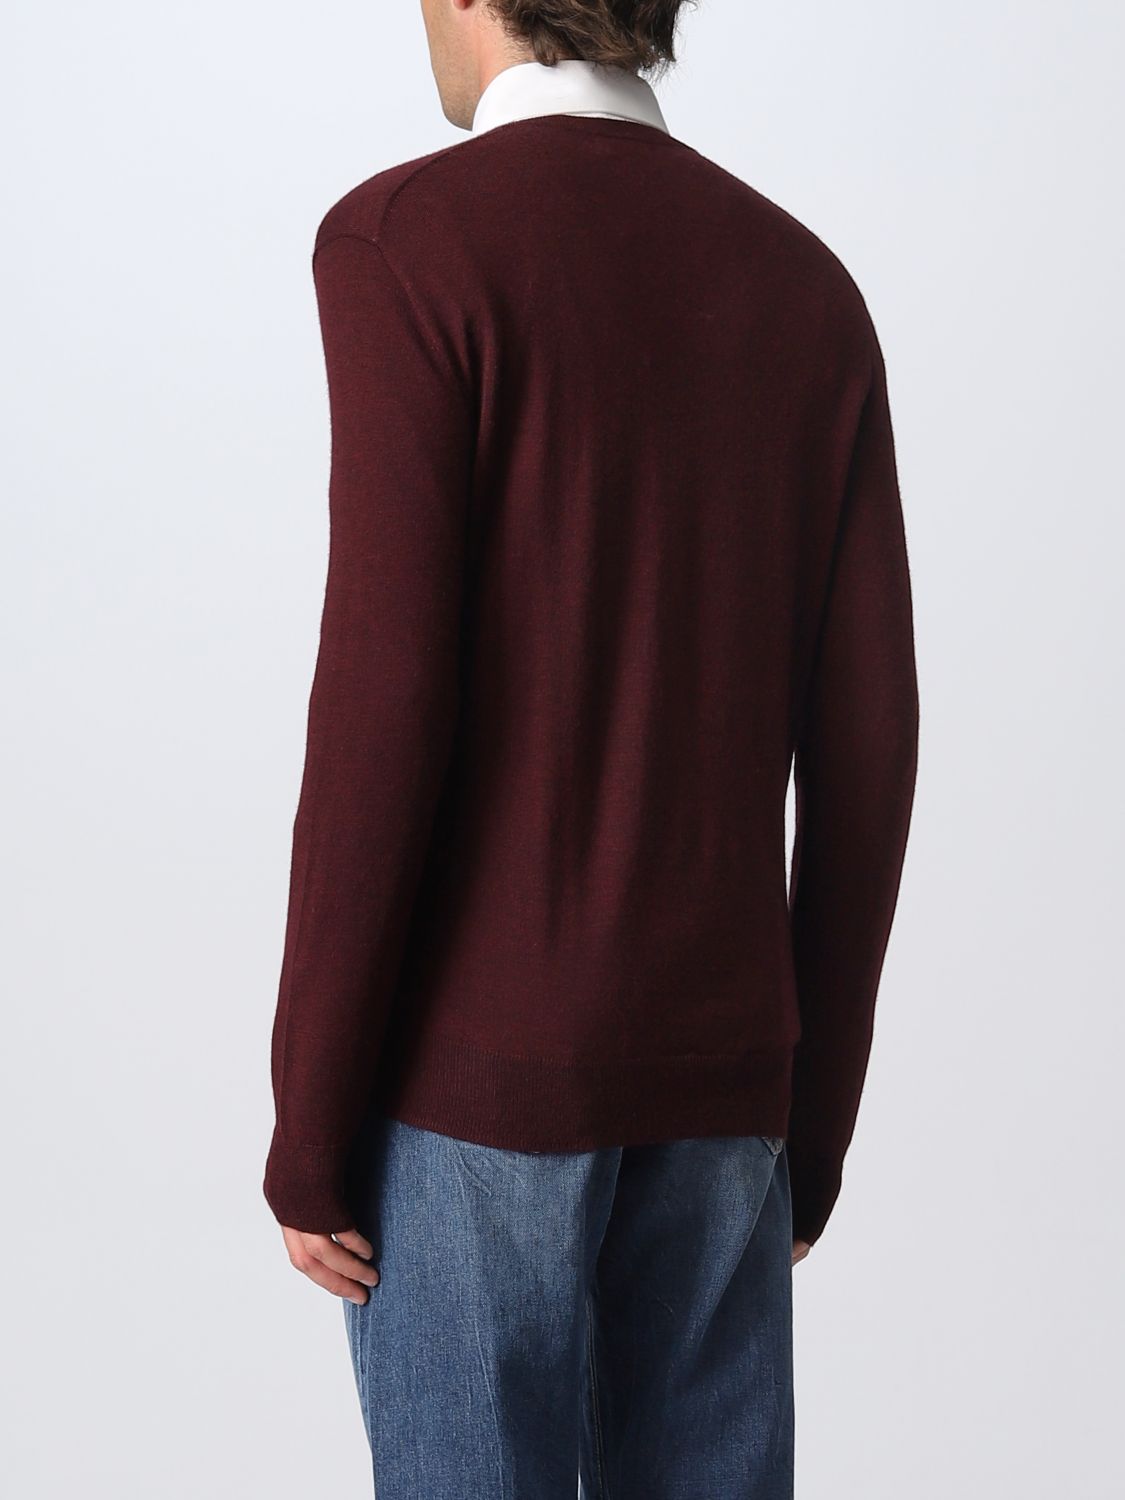 POLO RALPH LAUREN: sweater for man - Wine | Polo Ralph Lauren sweater ...